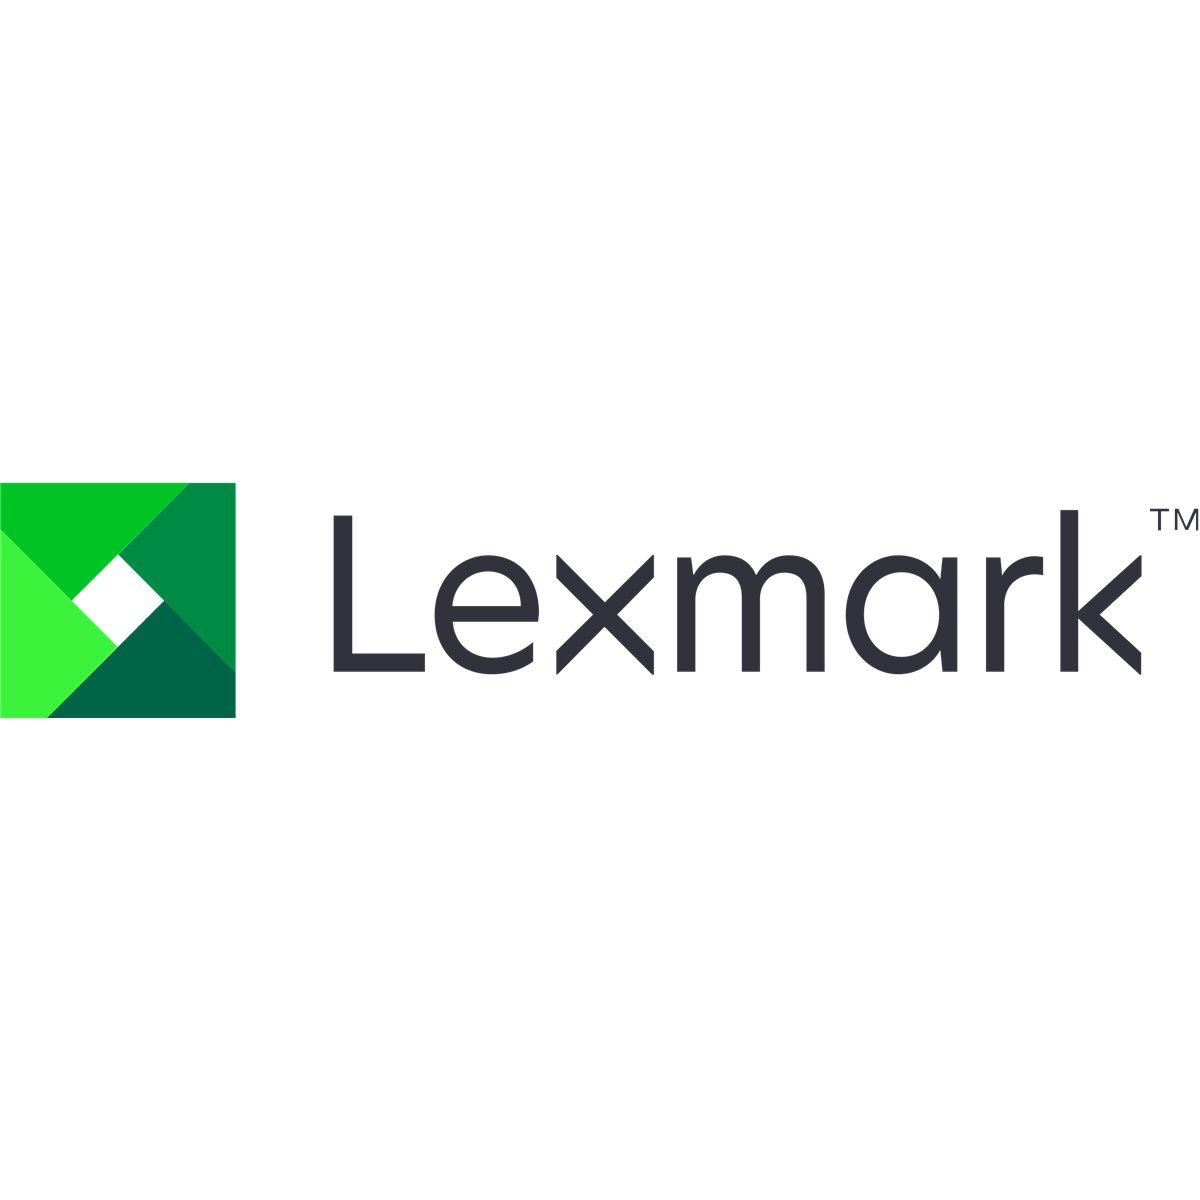 Lexmark W84x SVC Tray Insert Media